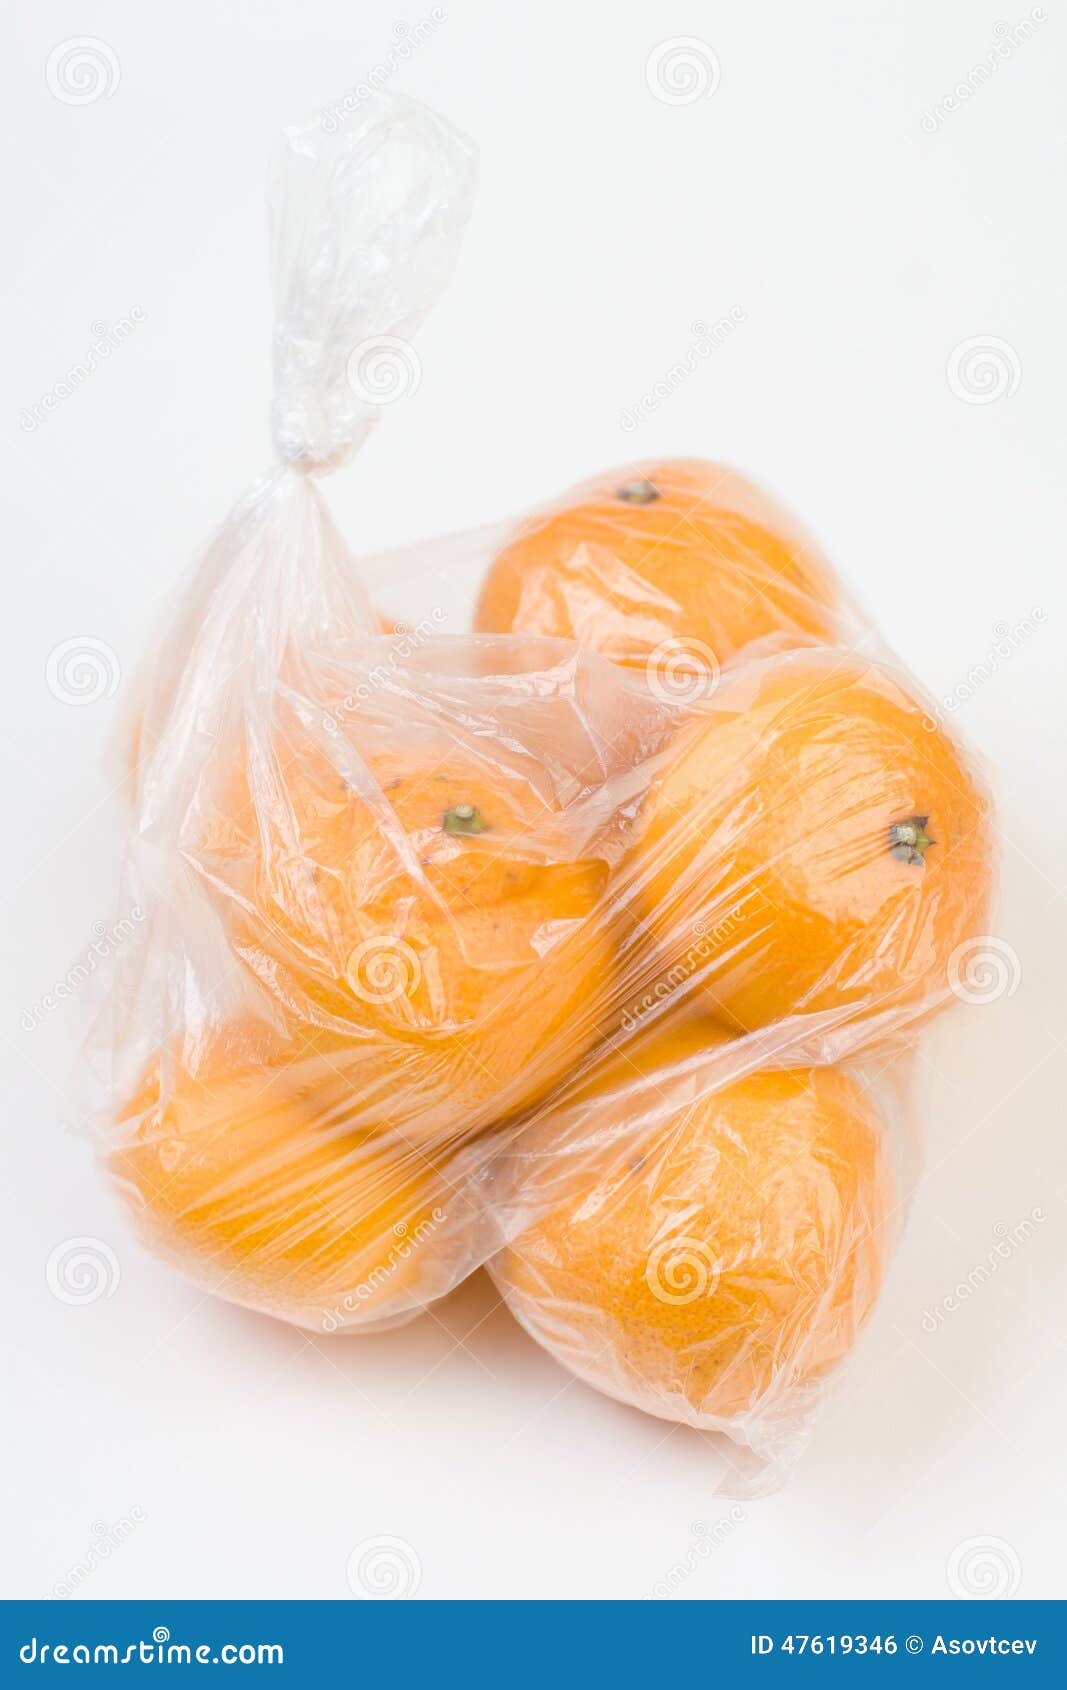 mandarins in the polyethylene bag 